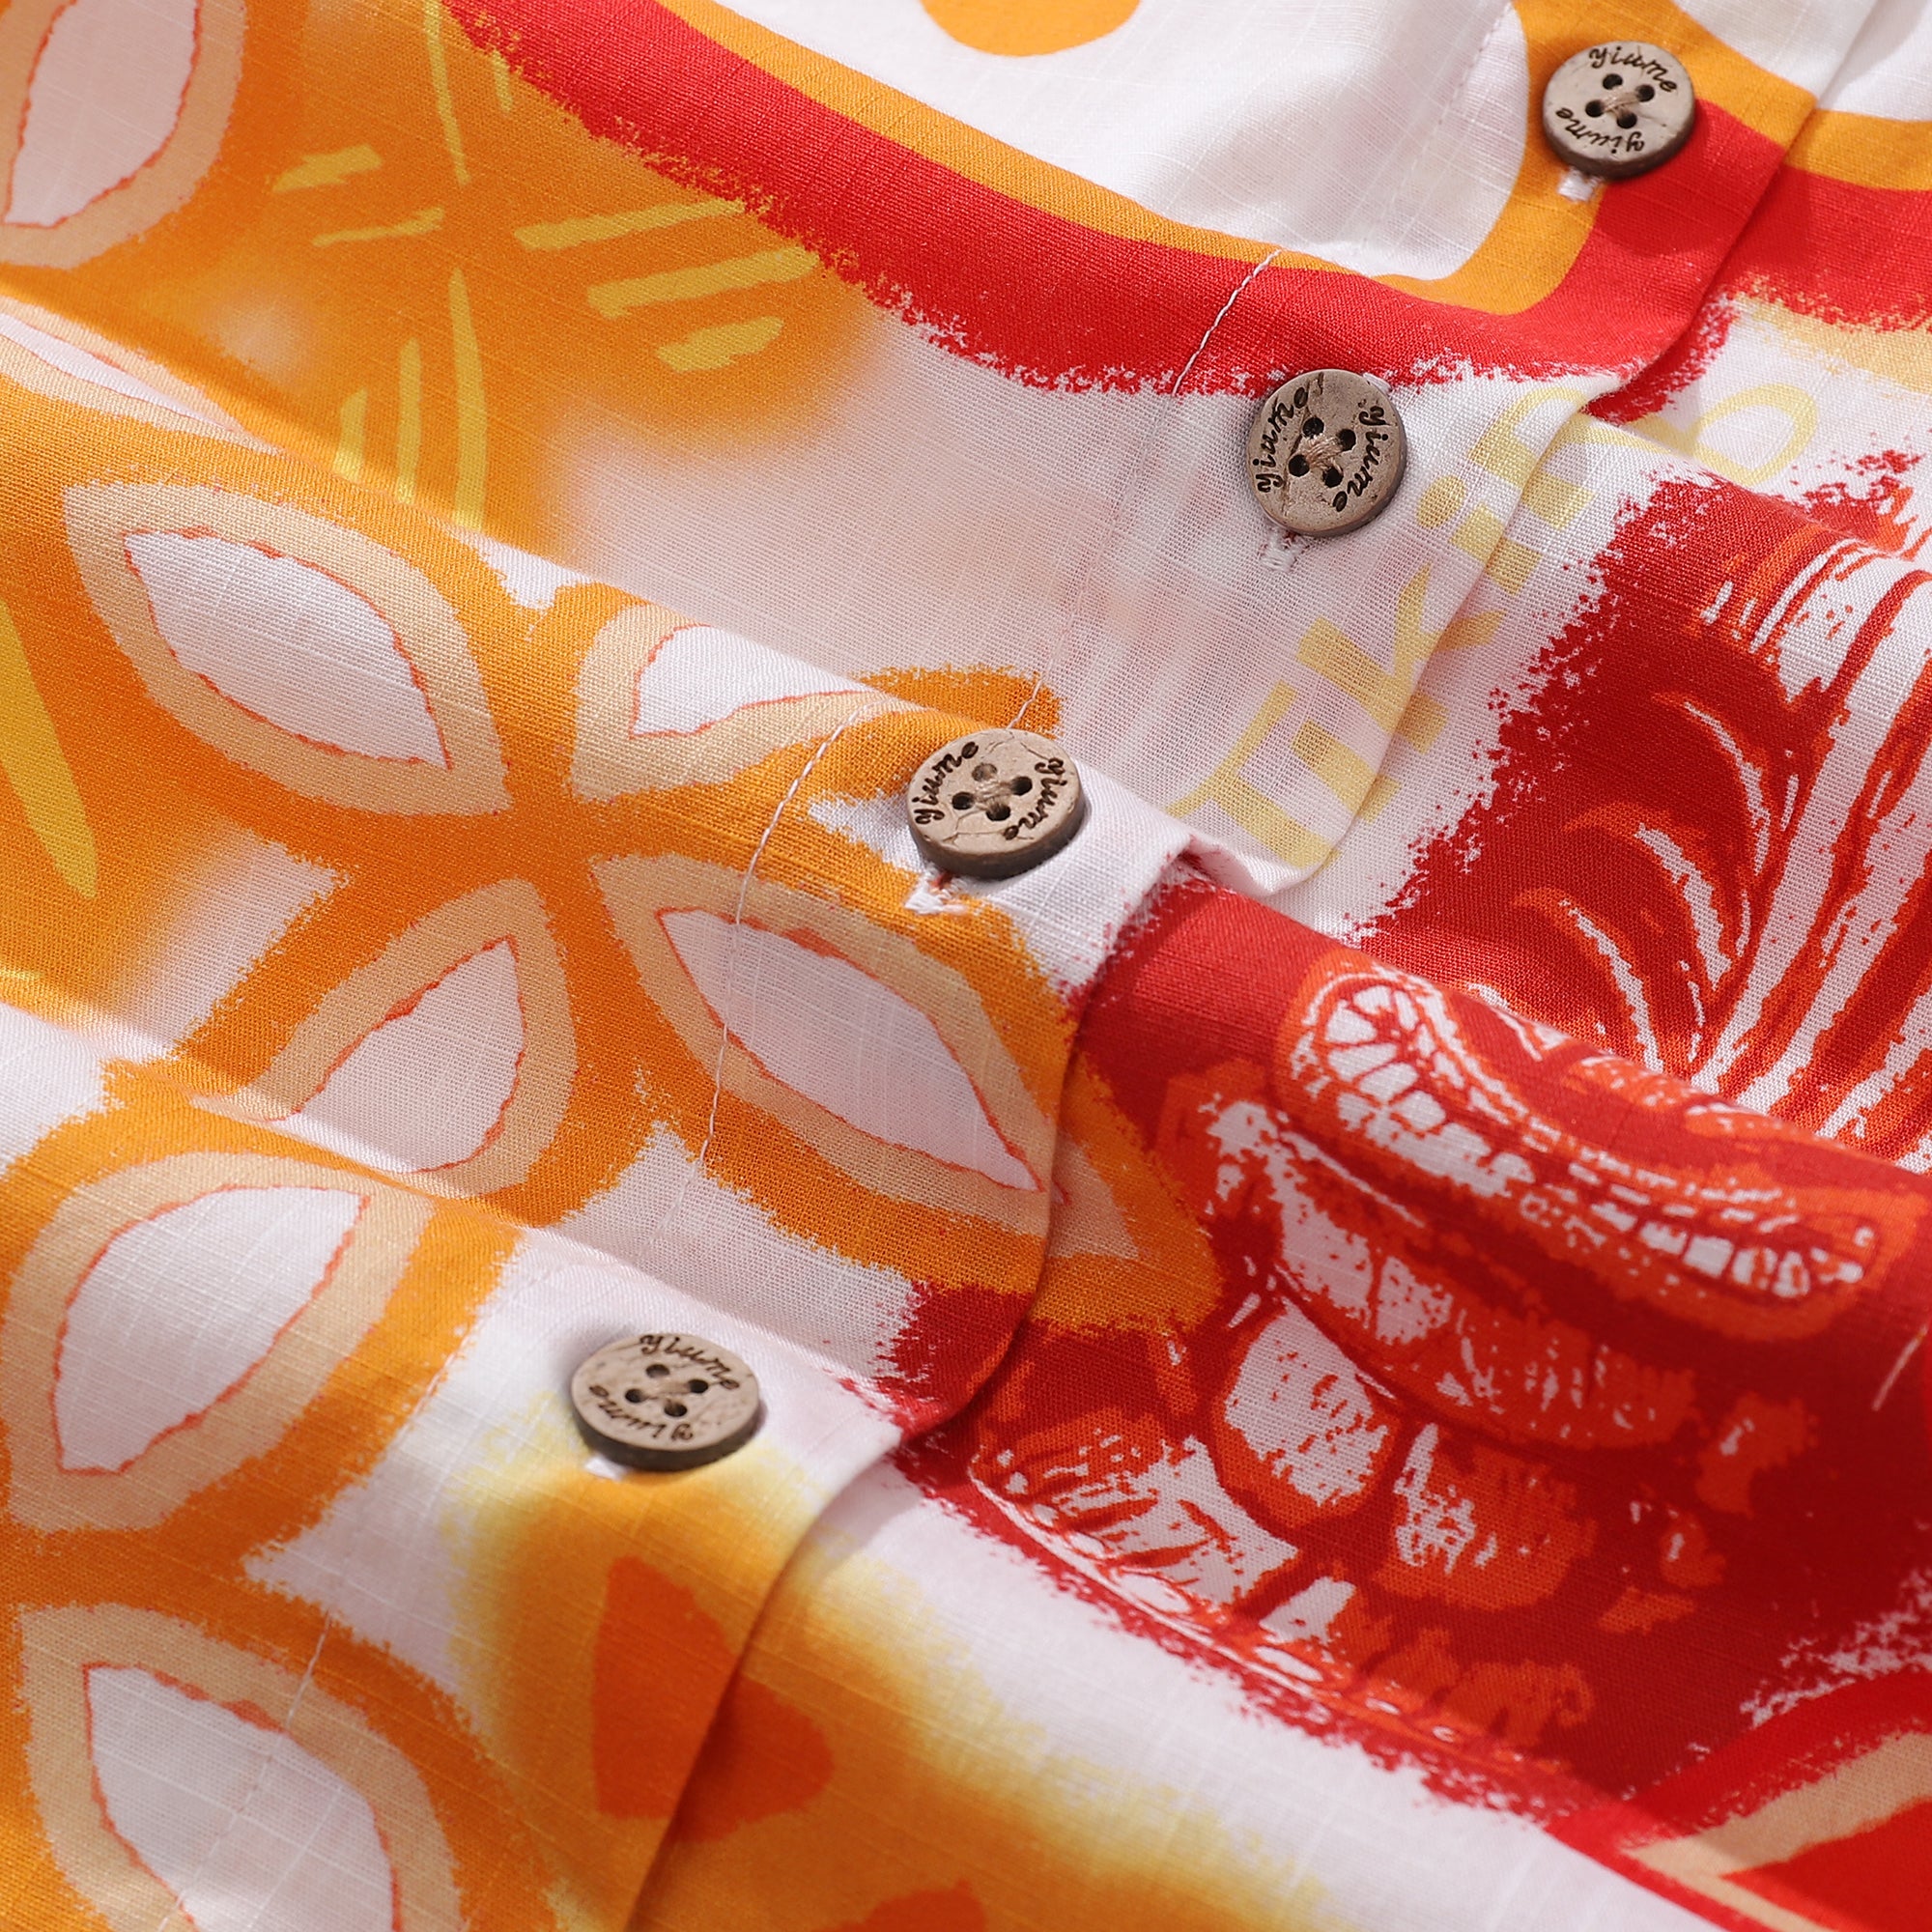 Women's Hawaiian Shirt Orange Totem By Tikirob Print Cotton Button-down Short Sleeve